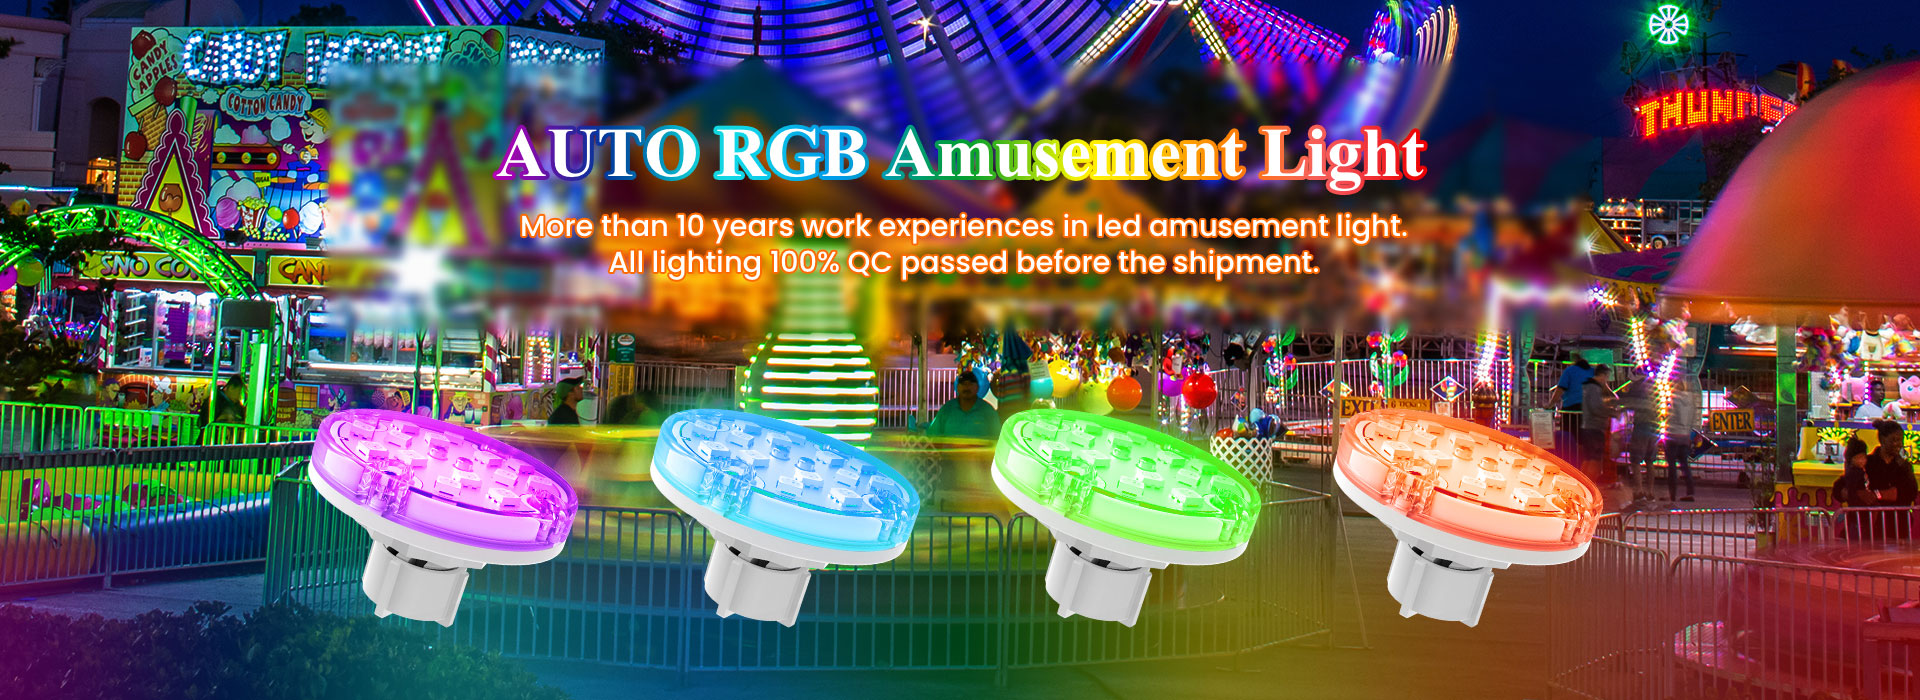 AUTO RGB Amusement Light